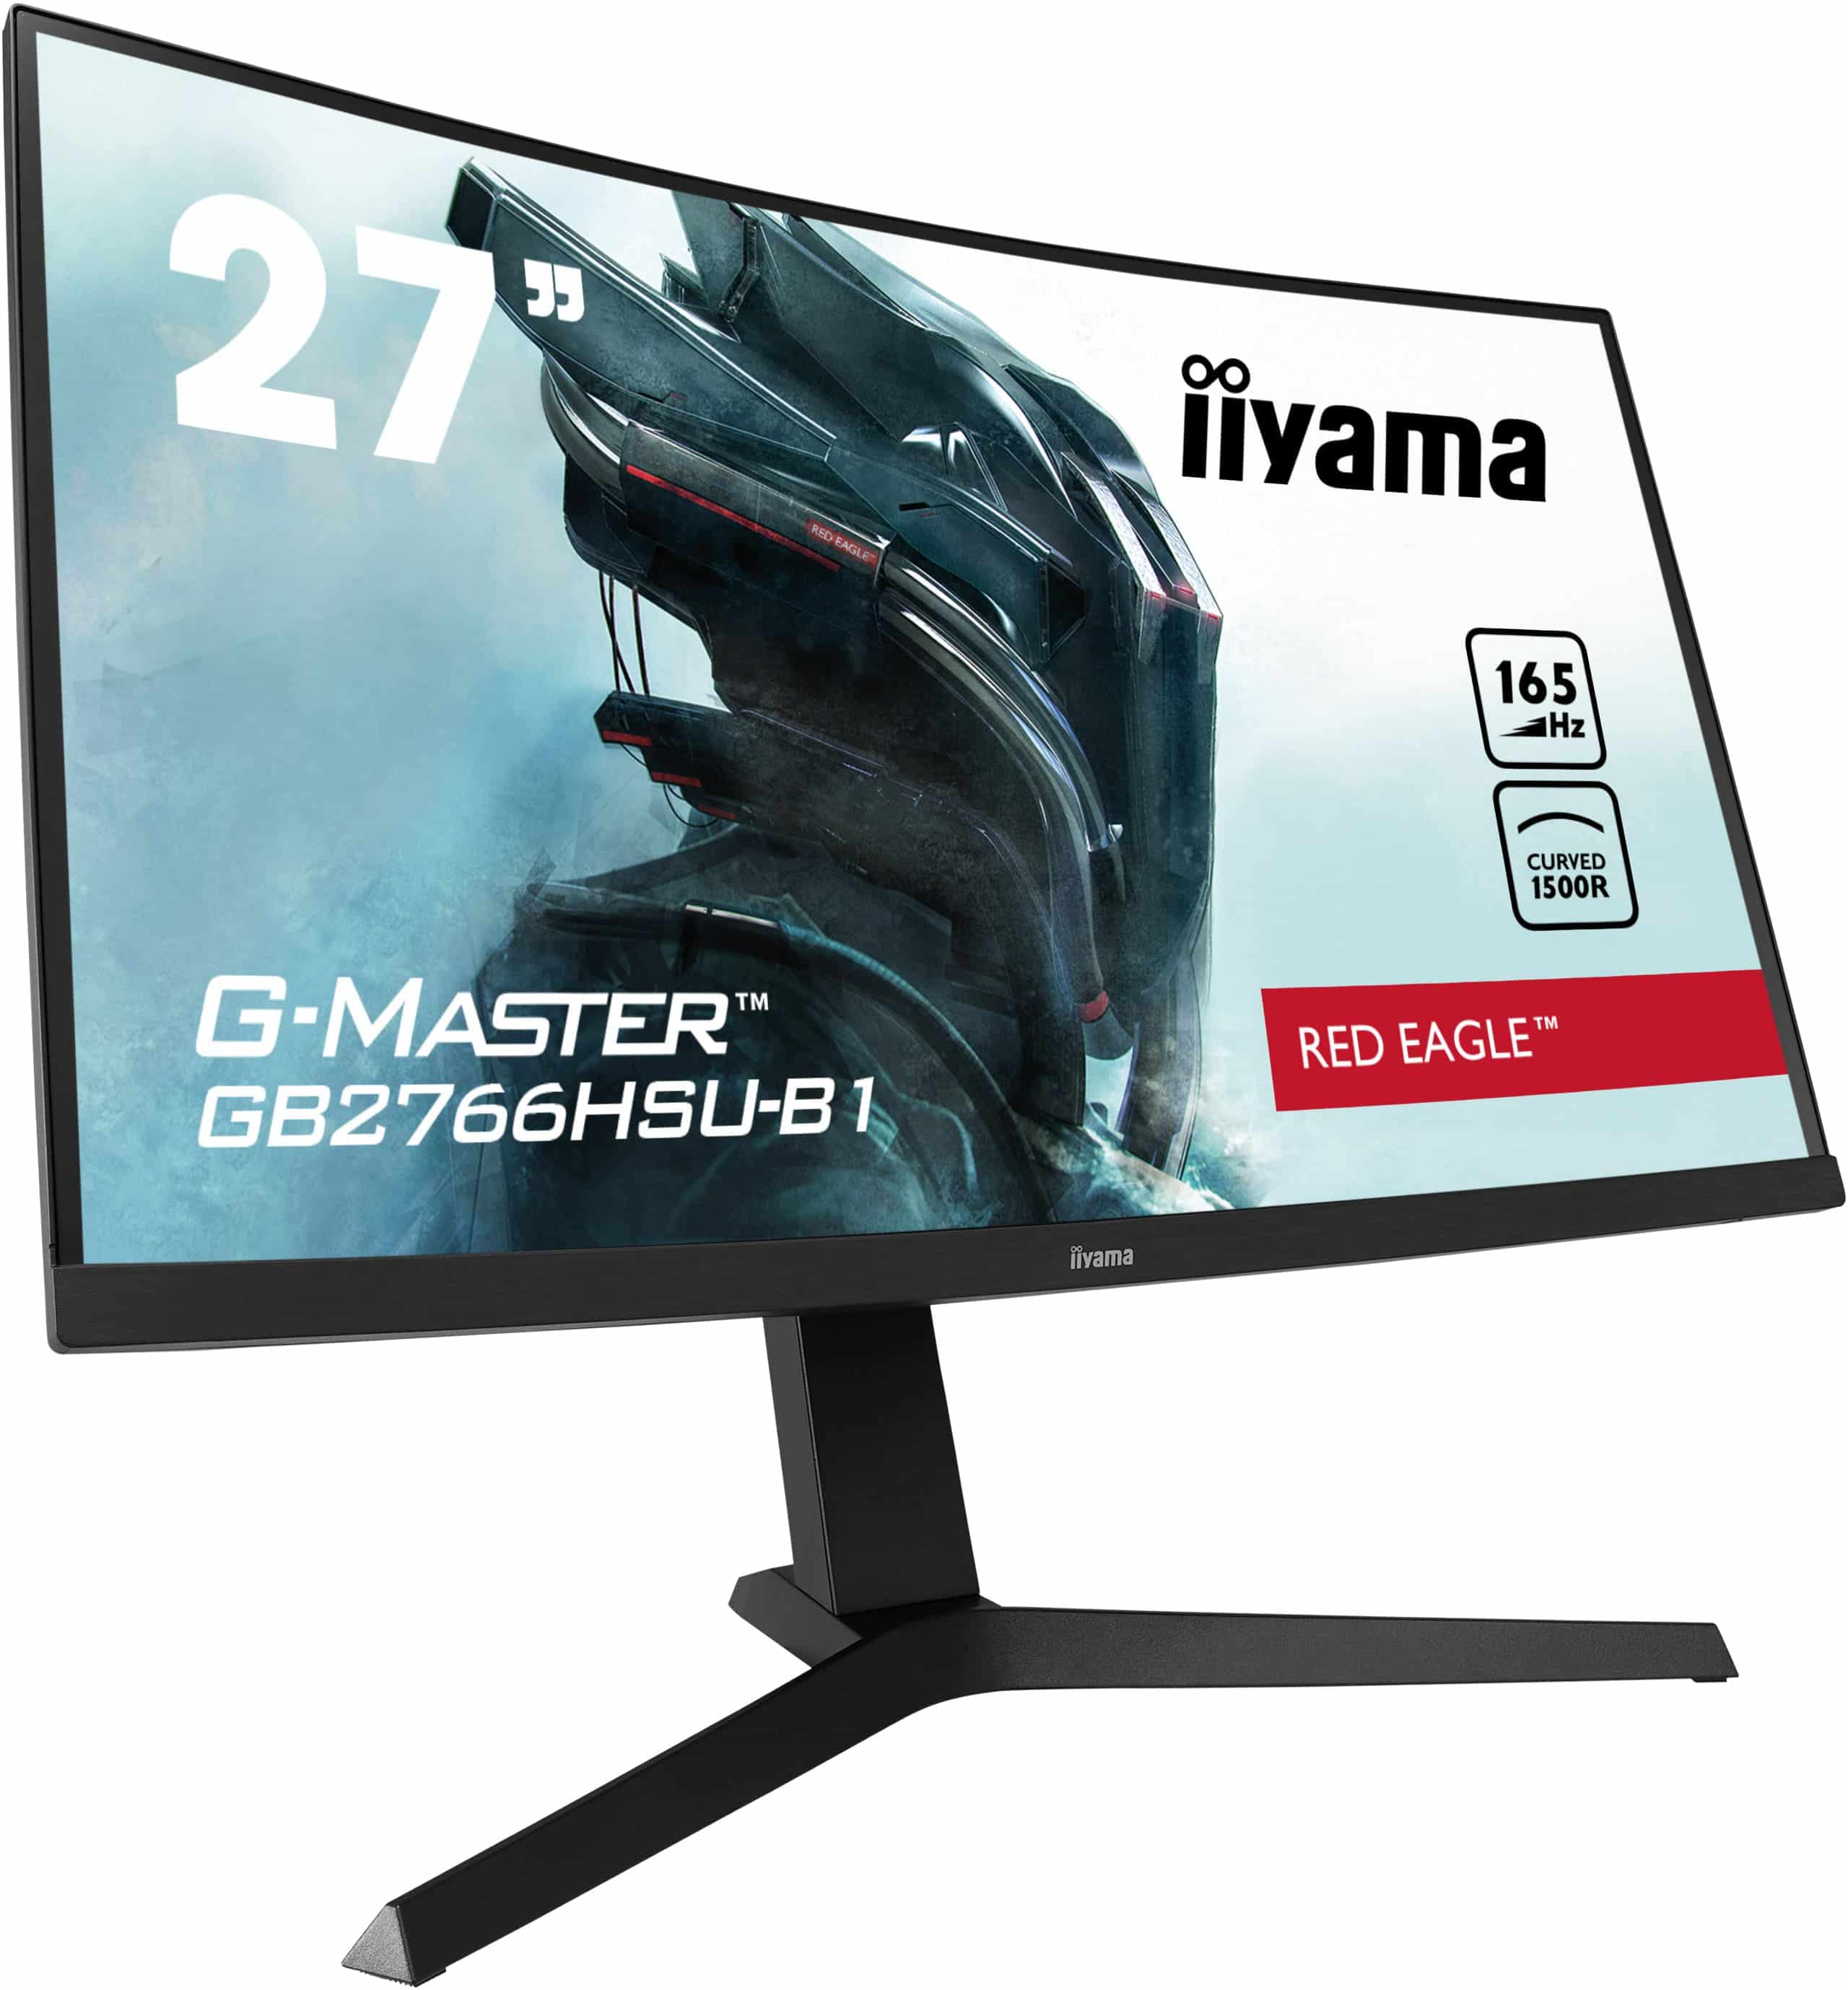 Iiyama G-MASTER GB2766HSU-B1 RED EAGLE | 27" | Full HD | 165Hz | Curved-Gaming-Monitor